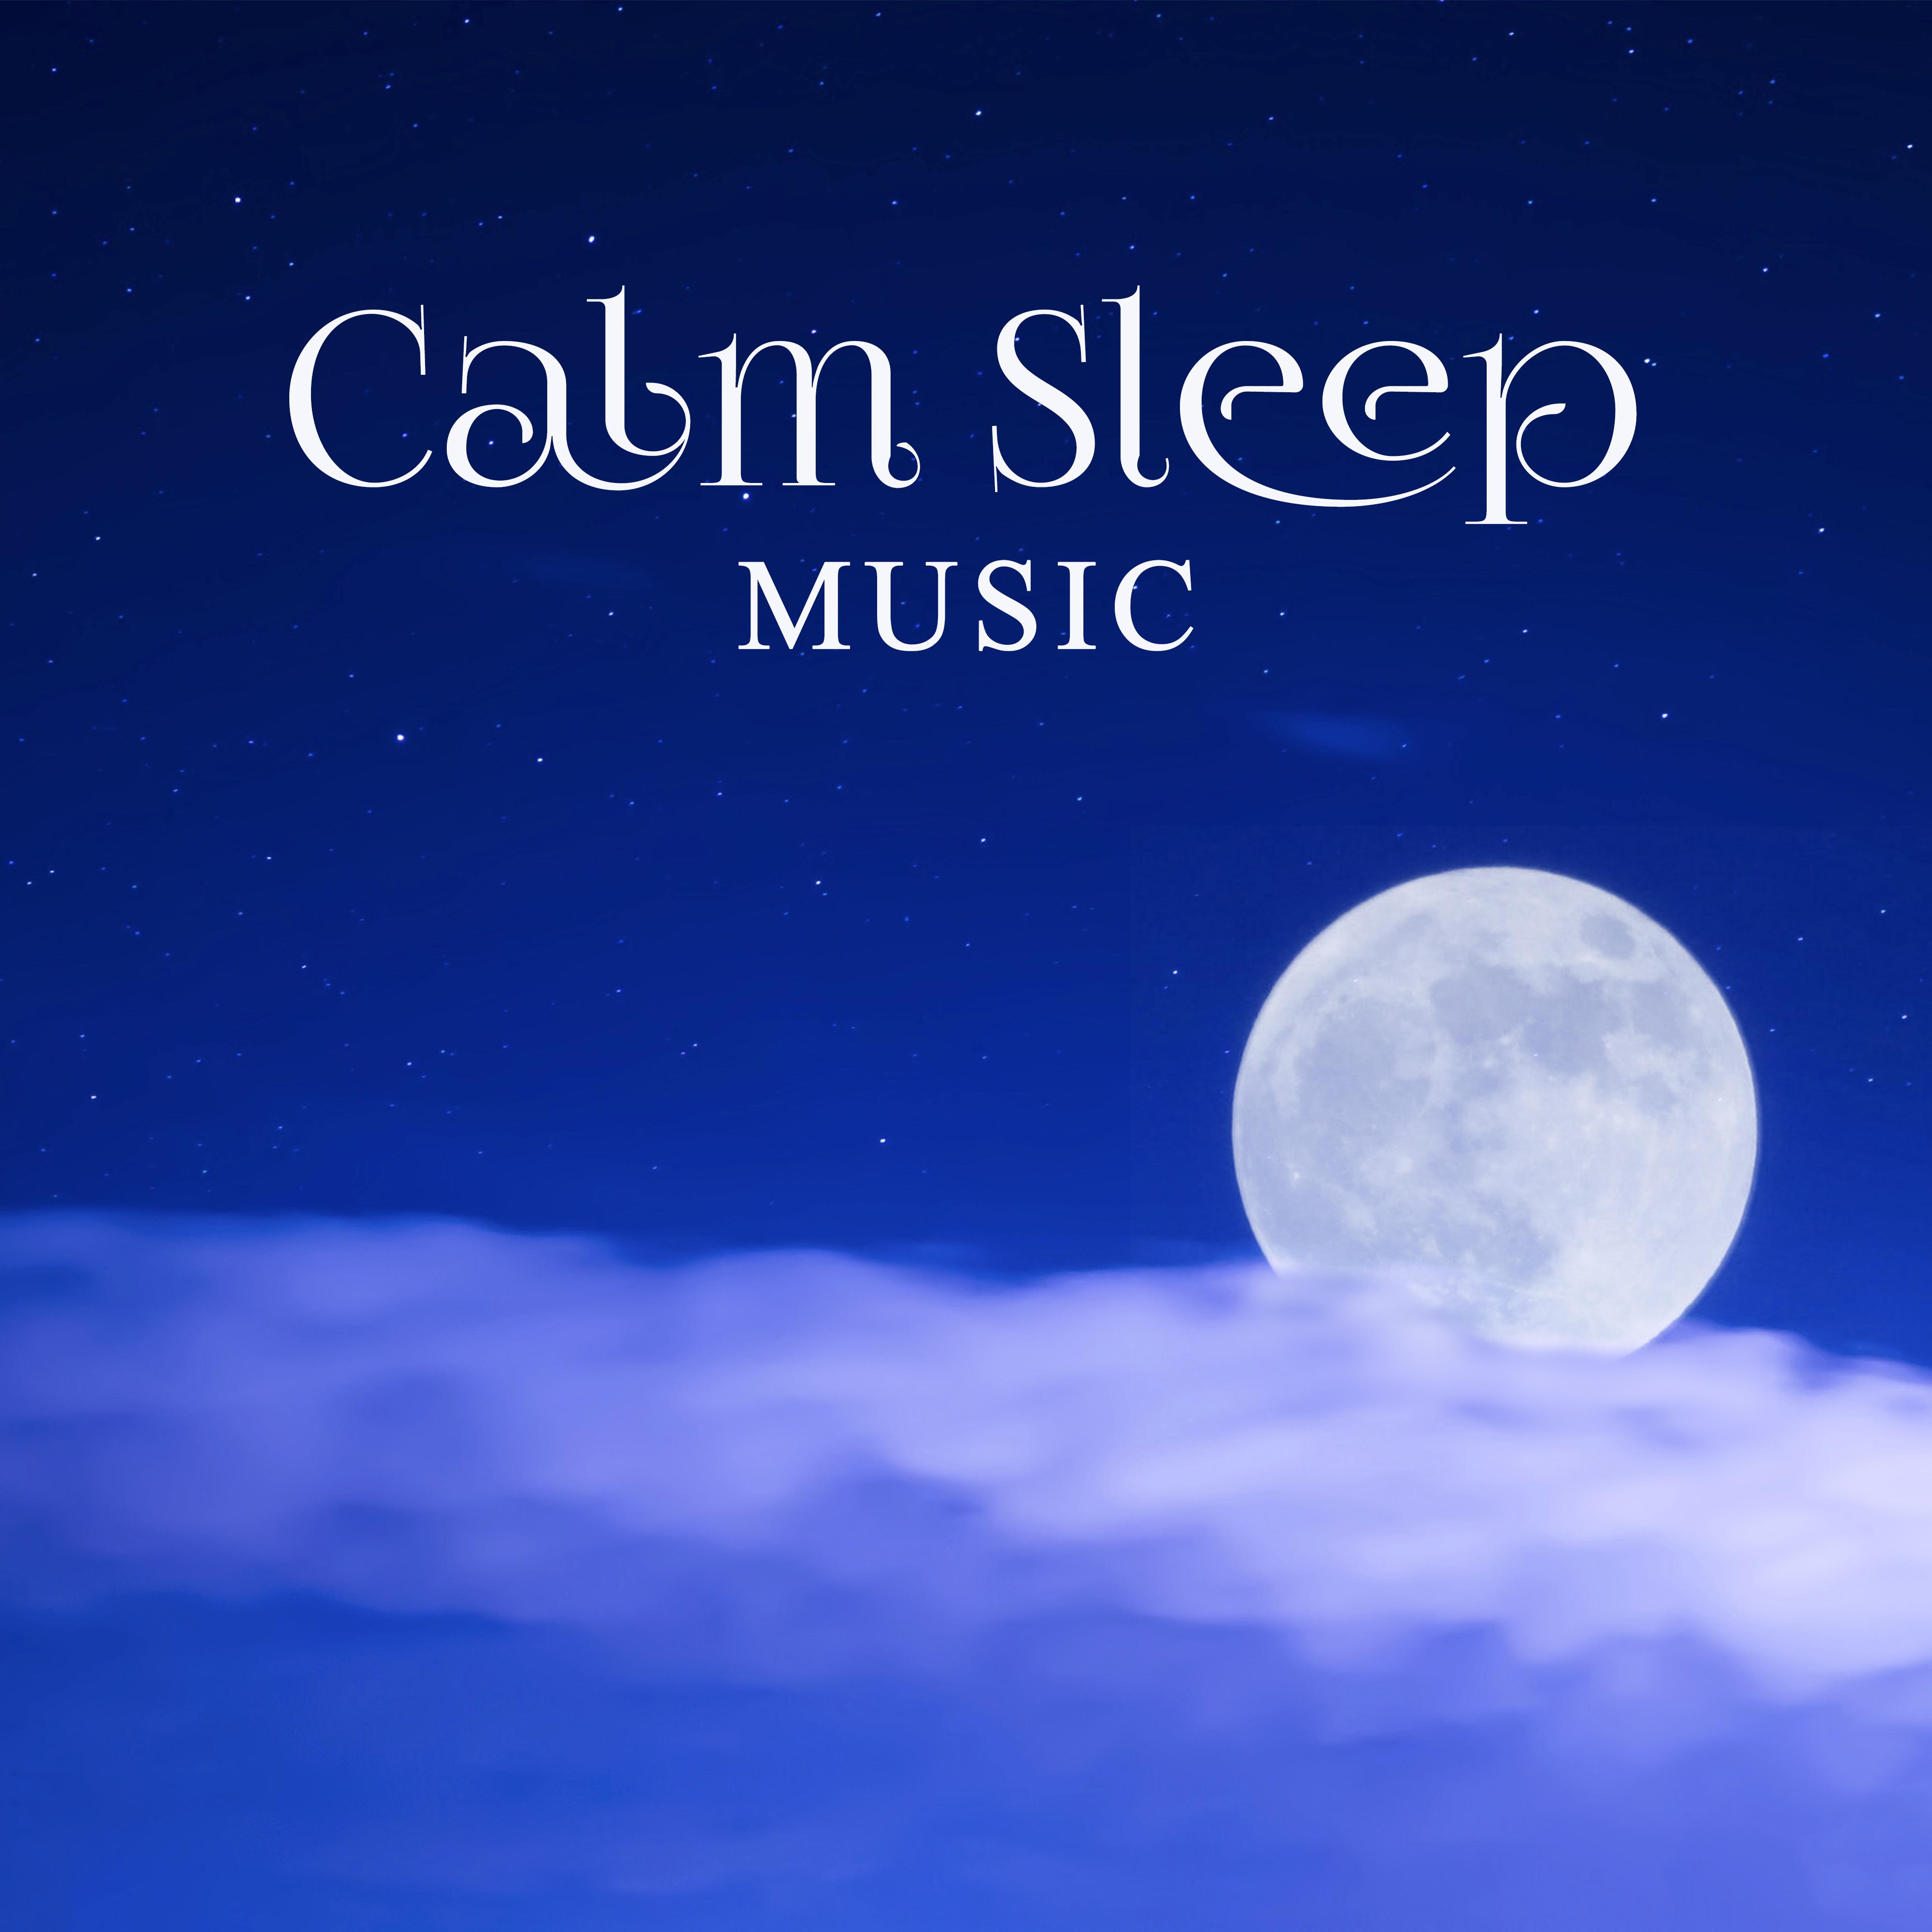 Calm Sleep Music – Relaxing Music for Sleep, Fall Asleep, Peaceful New Age, Deep Sleep, Healing Sounds of Nature